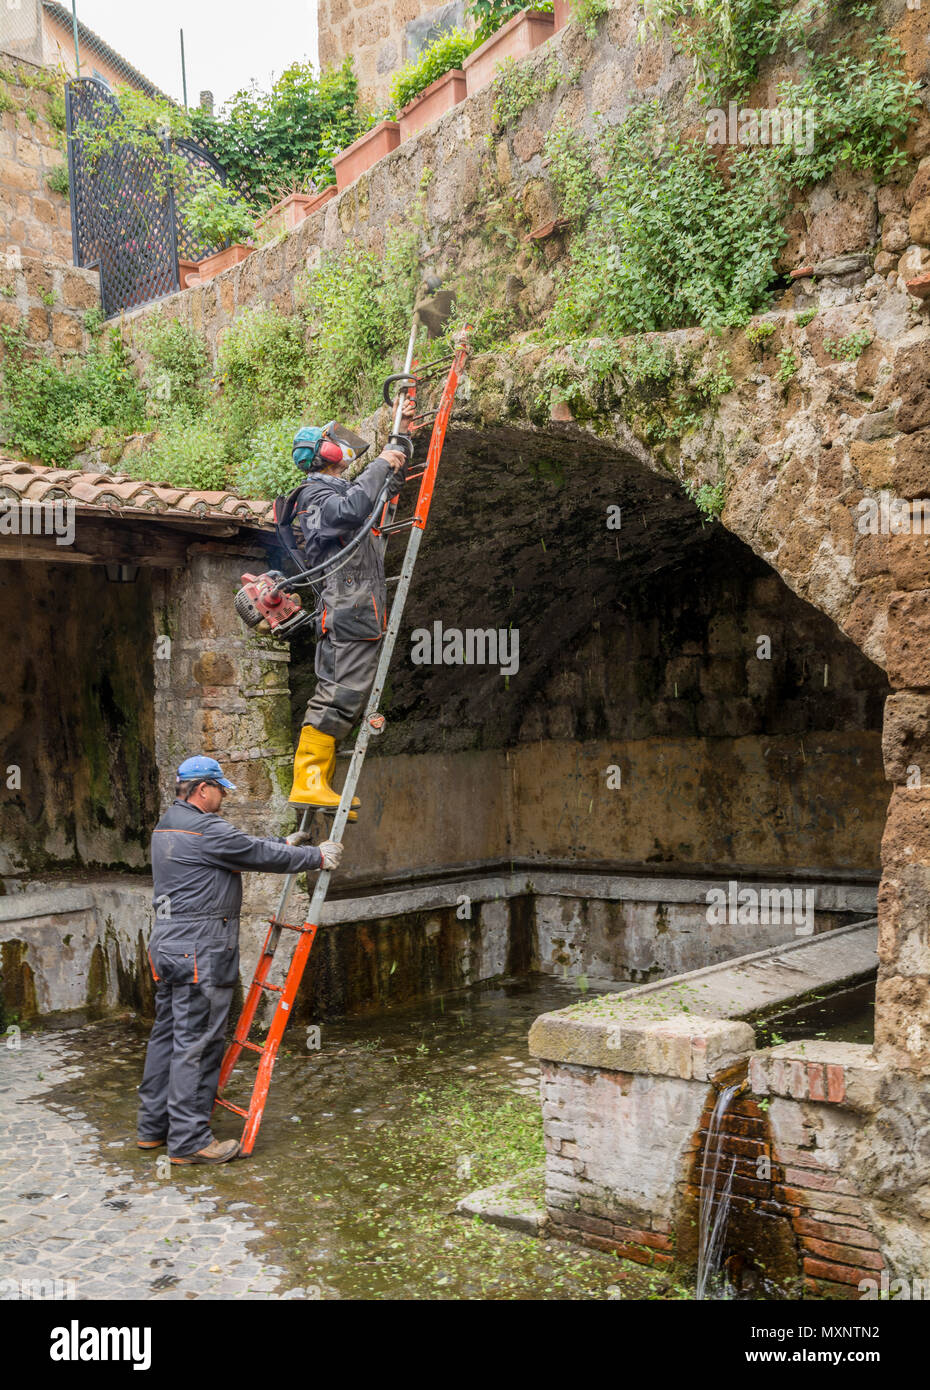 Tuscania (Viterbo), Italia - Mayo 2, 2018: usando strimmer jardinero municipal en un sitio arqueológico en Tuscania, Italia Foto de stock